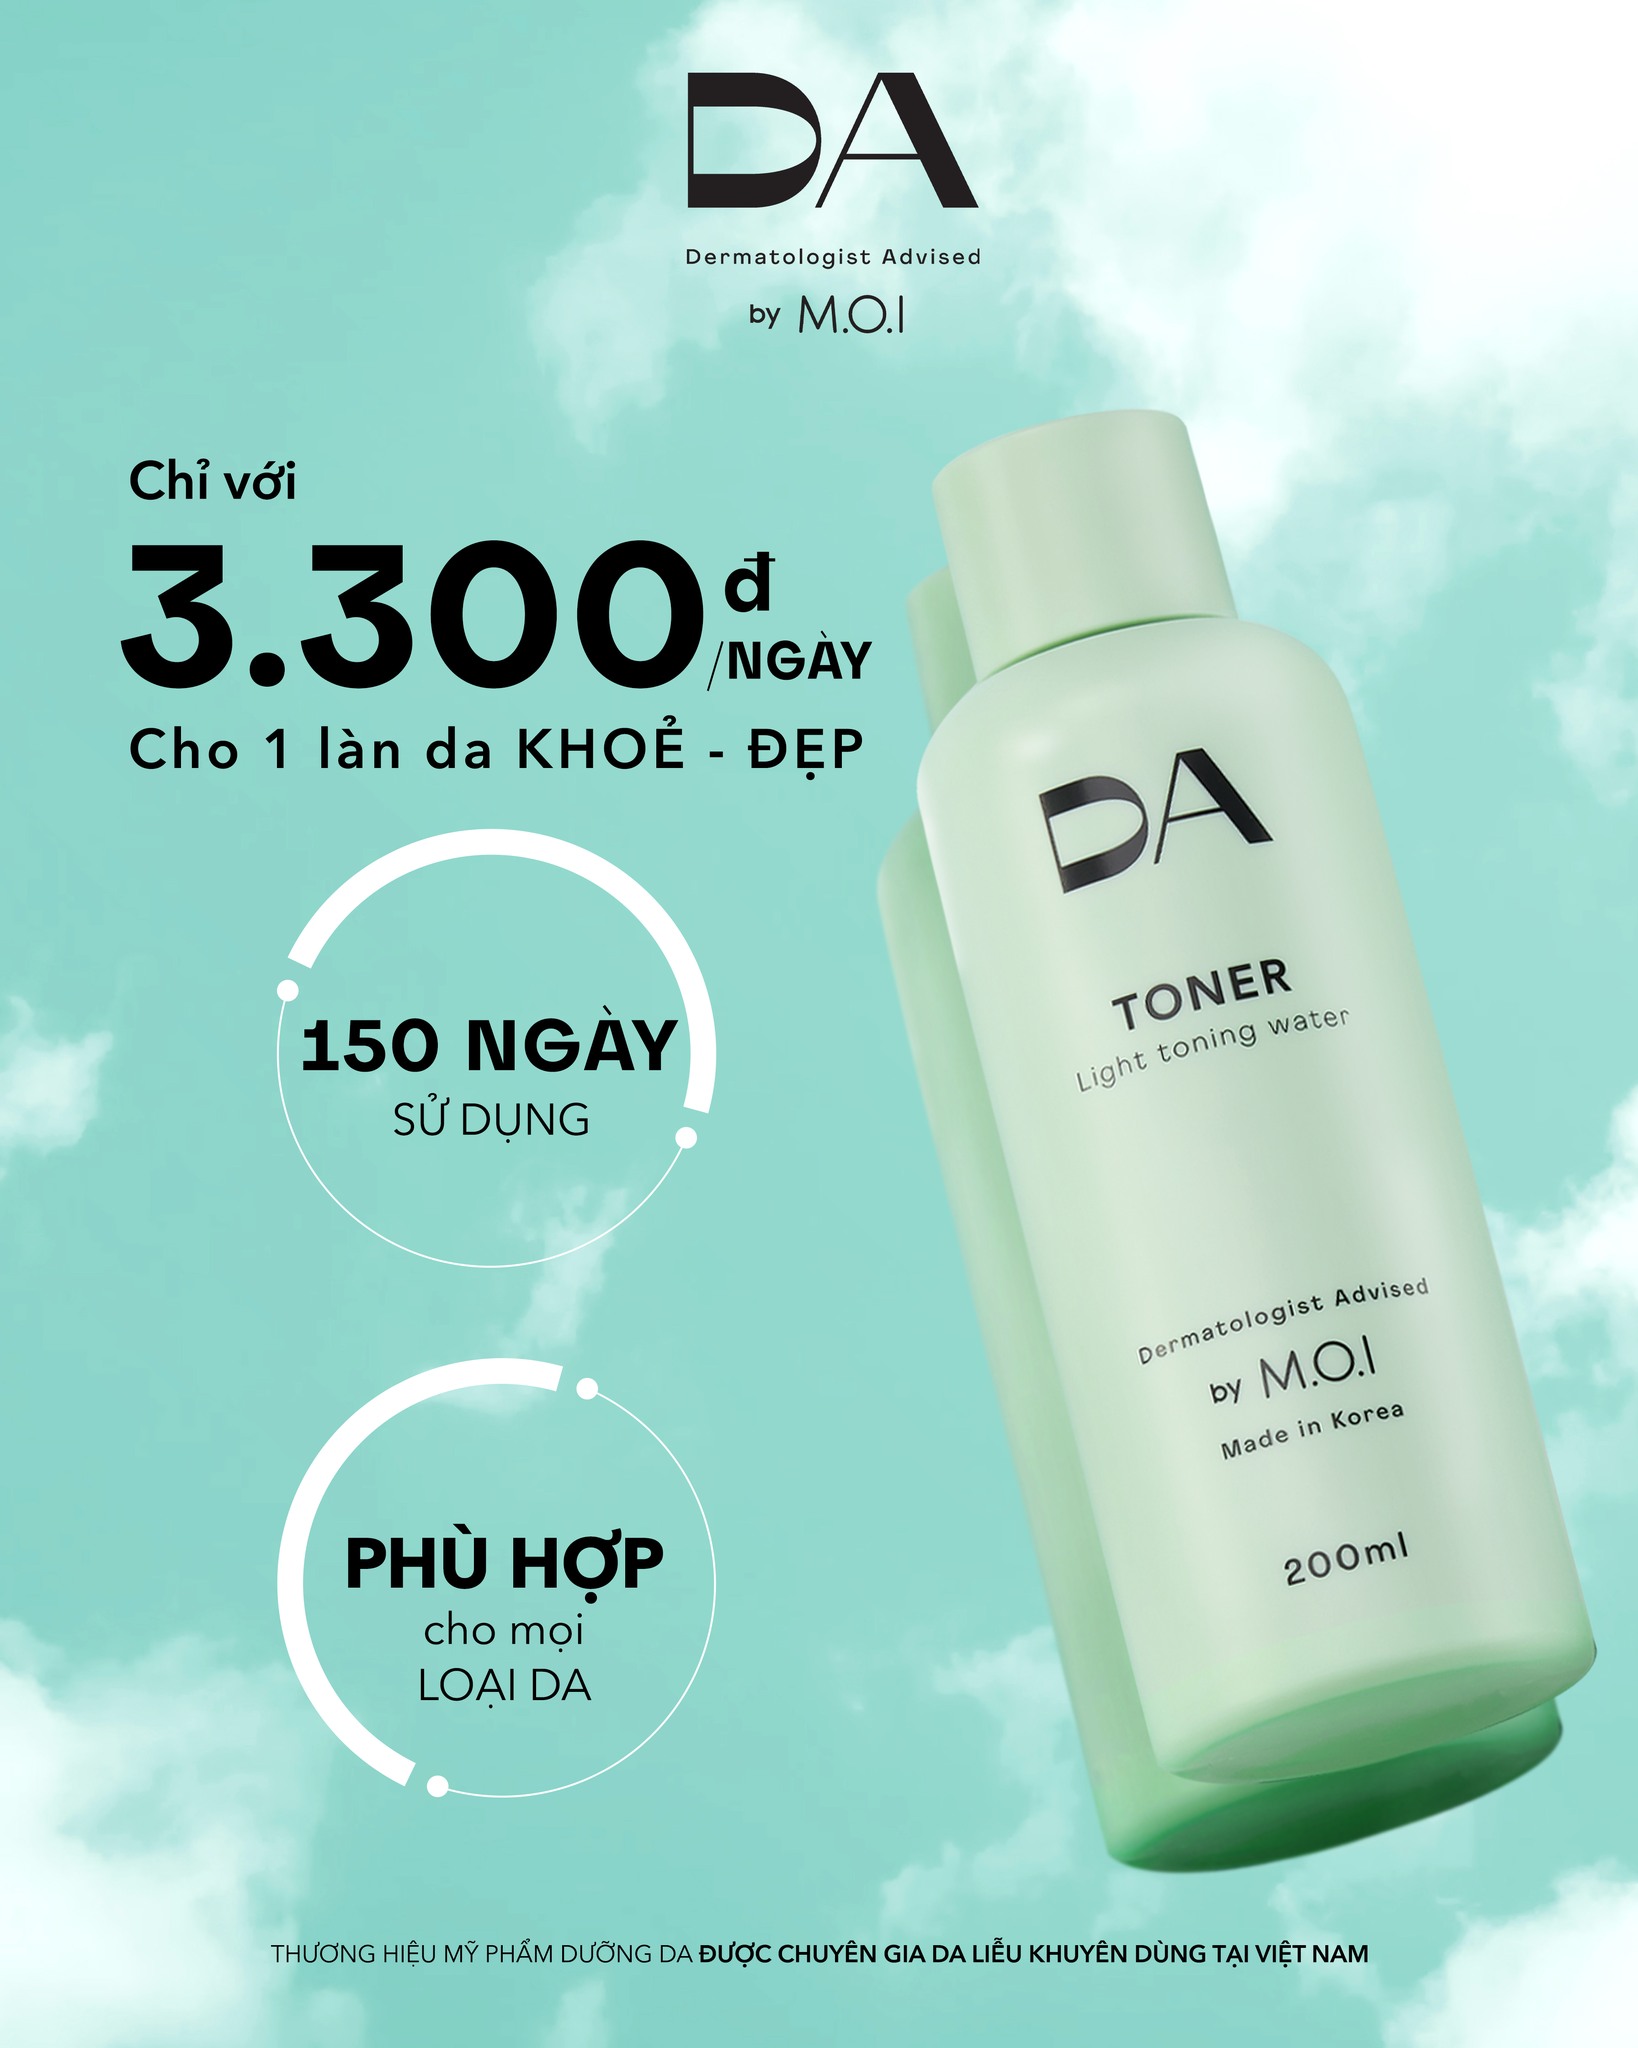 Toner DA by MOI Cosmetics